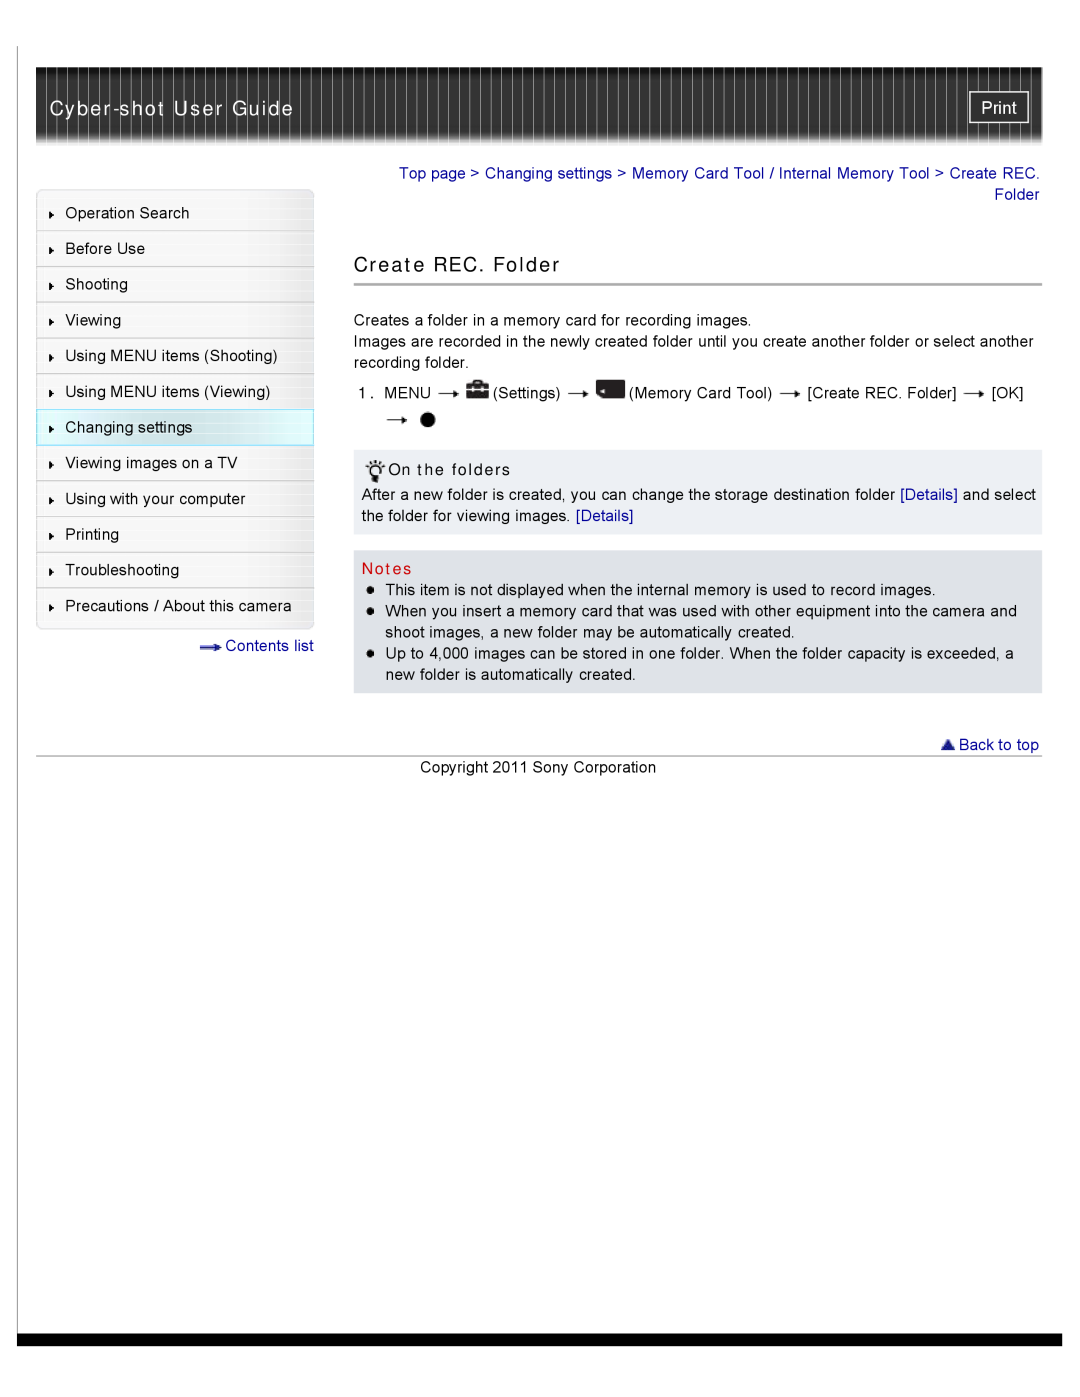 Sony DSC-W510 manual Create REC. Folder, Cyber-shot User Guide, Print, On the folders, Back to top 